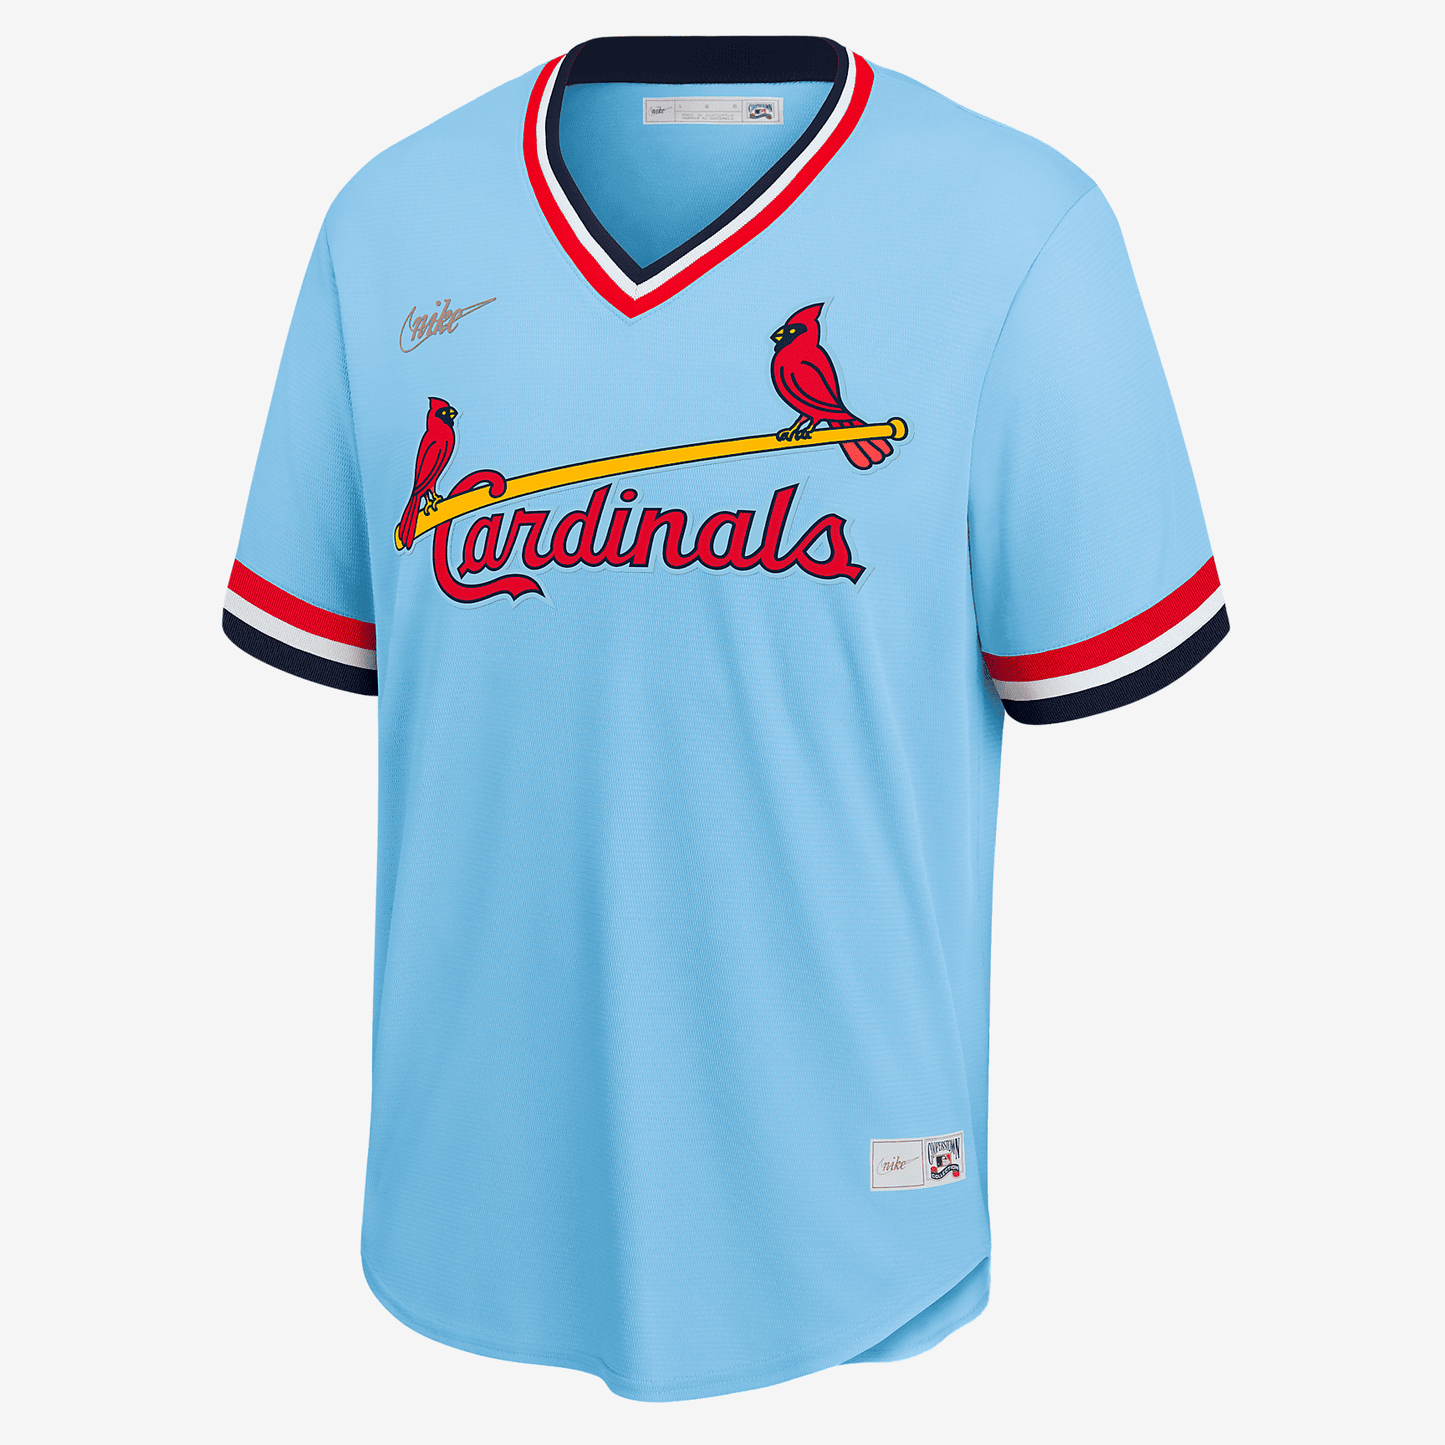 MLB St. Louis Cardinals (Ozzie Smith) Men's Cooperstown Baseball Jersey - Light Blue Heather